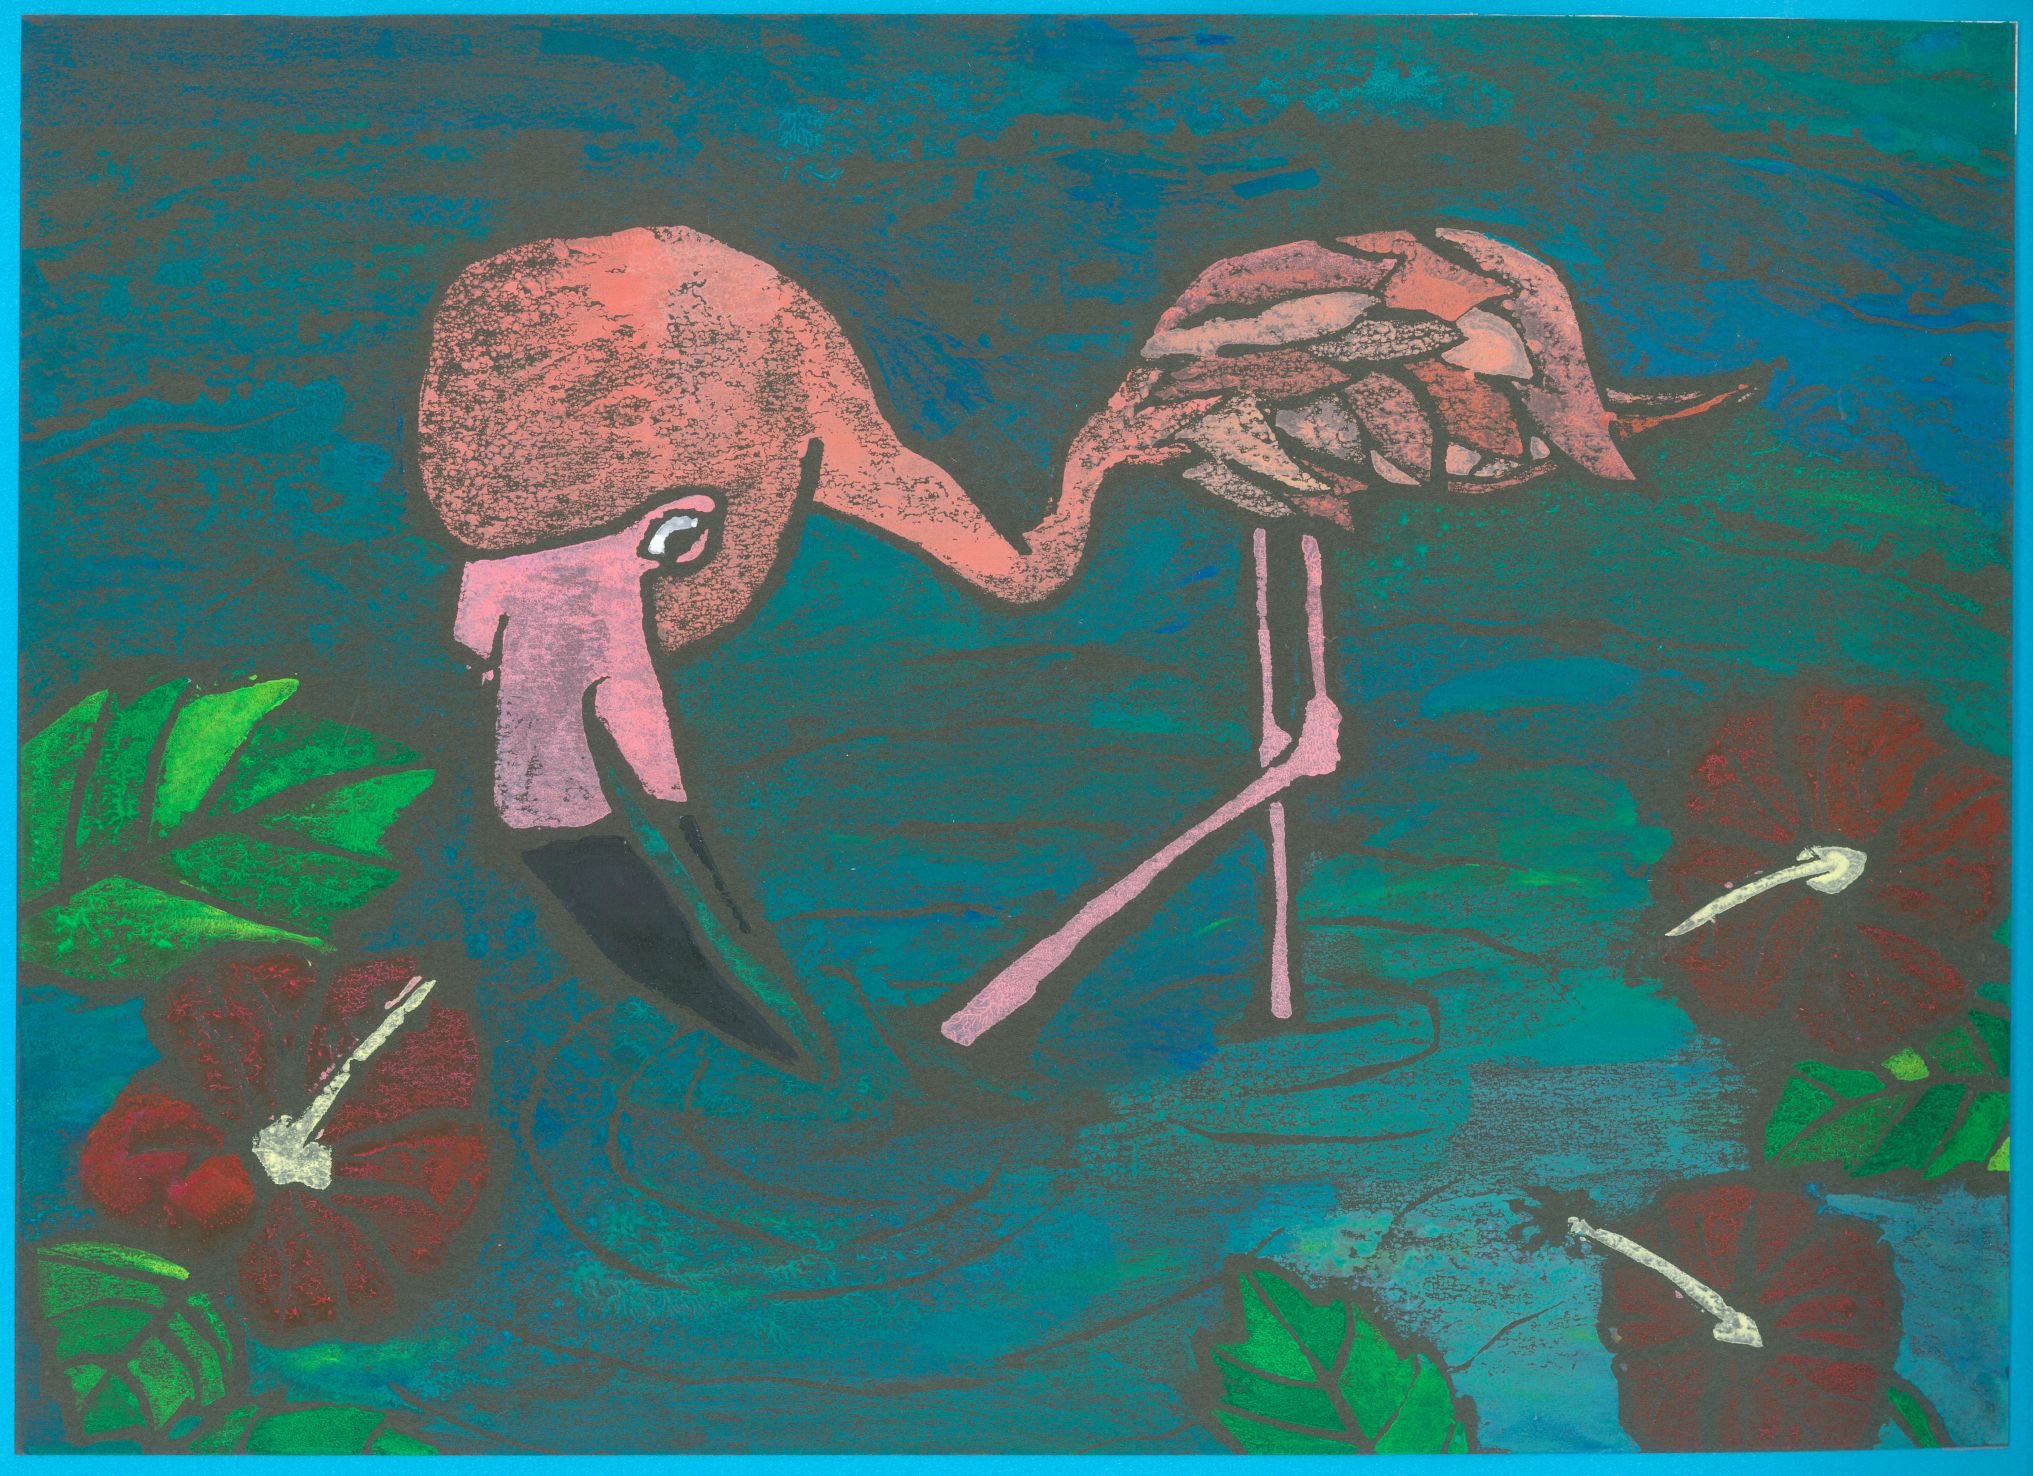 Student artwork – Dance floor for flamingo